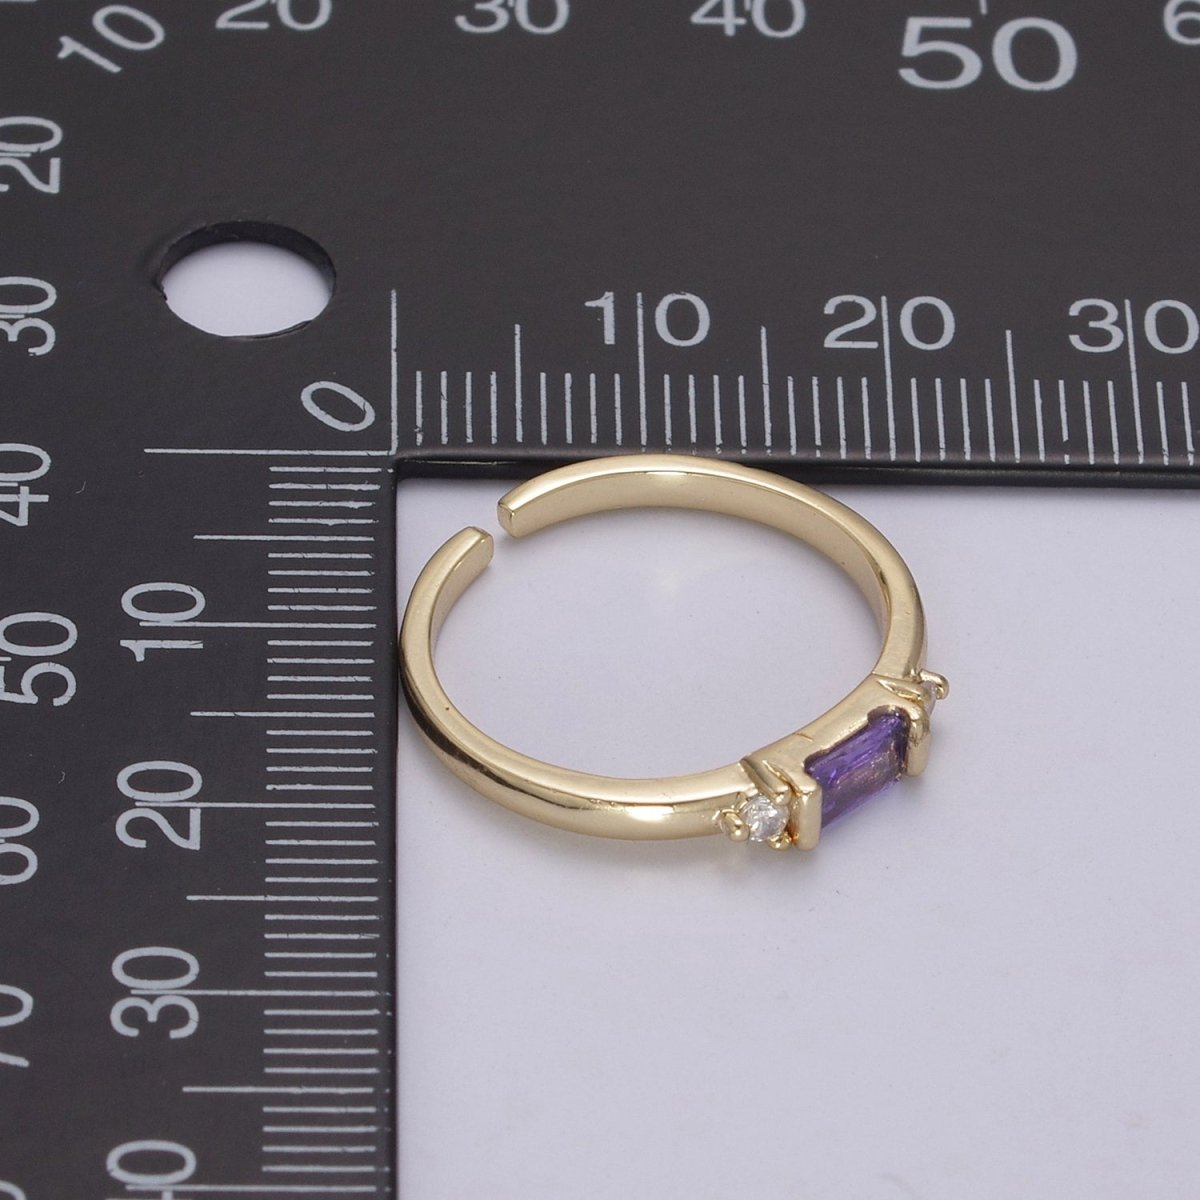 14K Gold Filled Baguette Ring / Petite Baguette Engagement Ring / Baguette Solitaire Ring / Dainty Birthstone CZ Ring U-163 ~ U-168 - DLUXCA